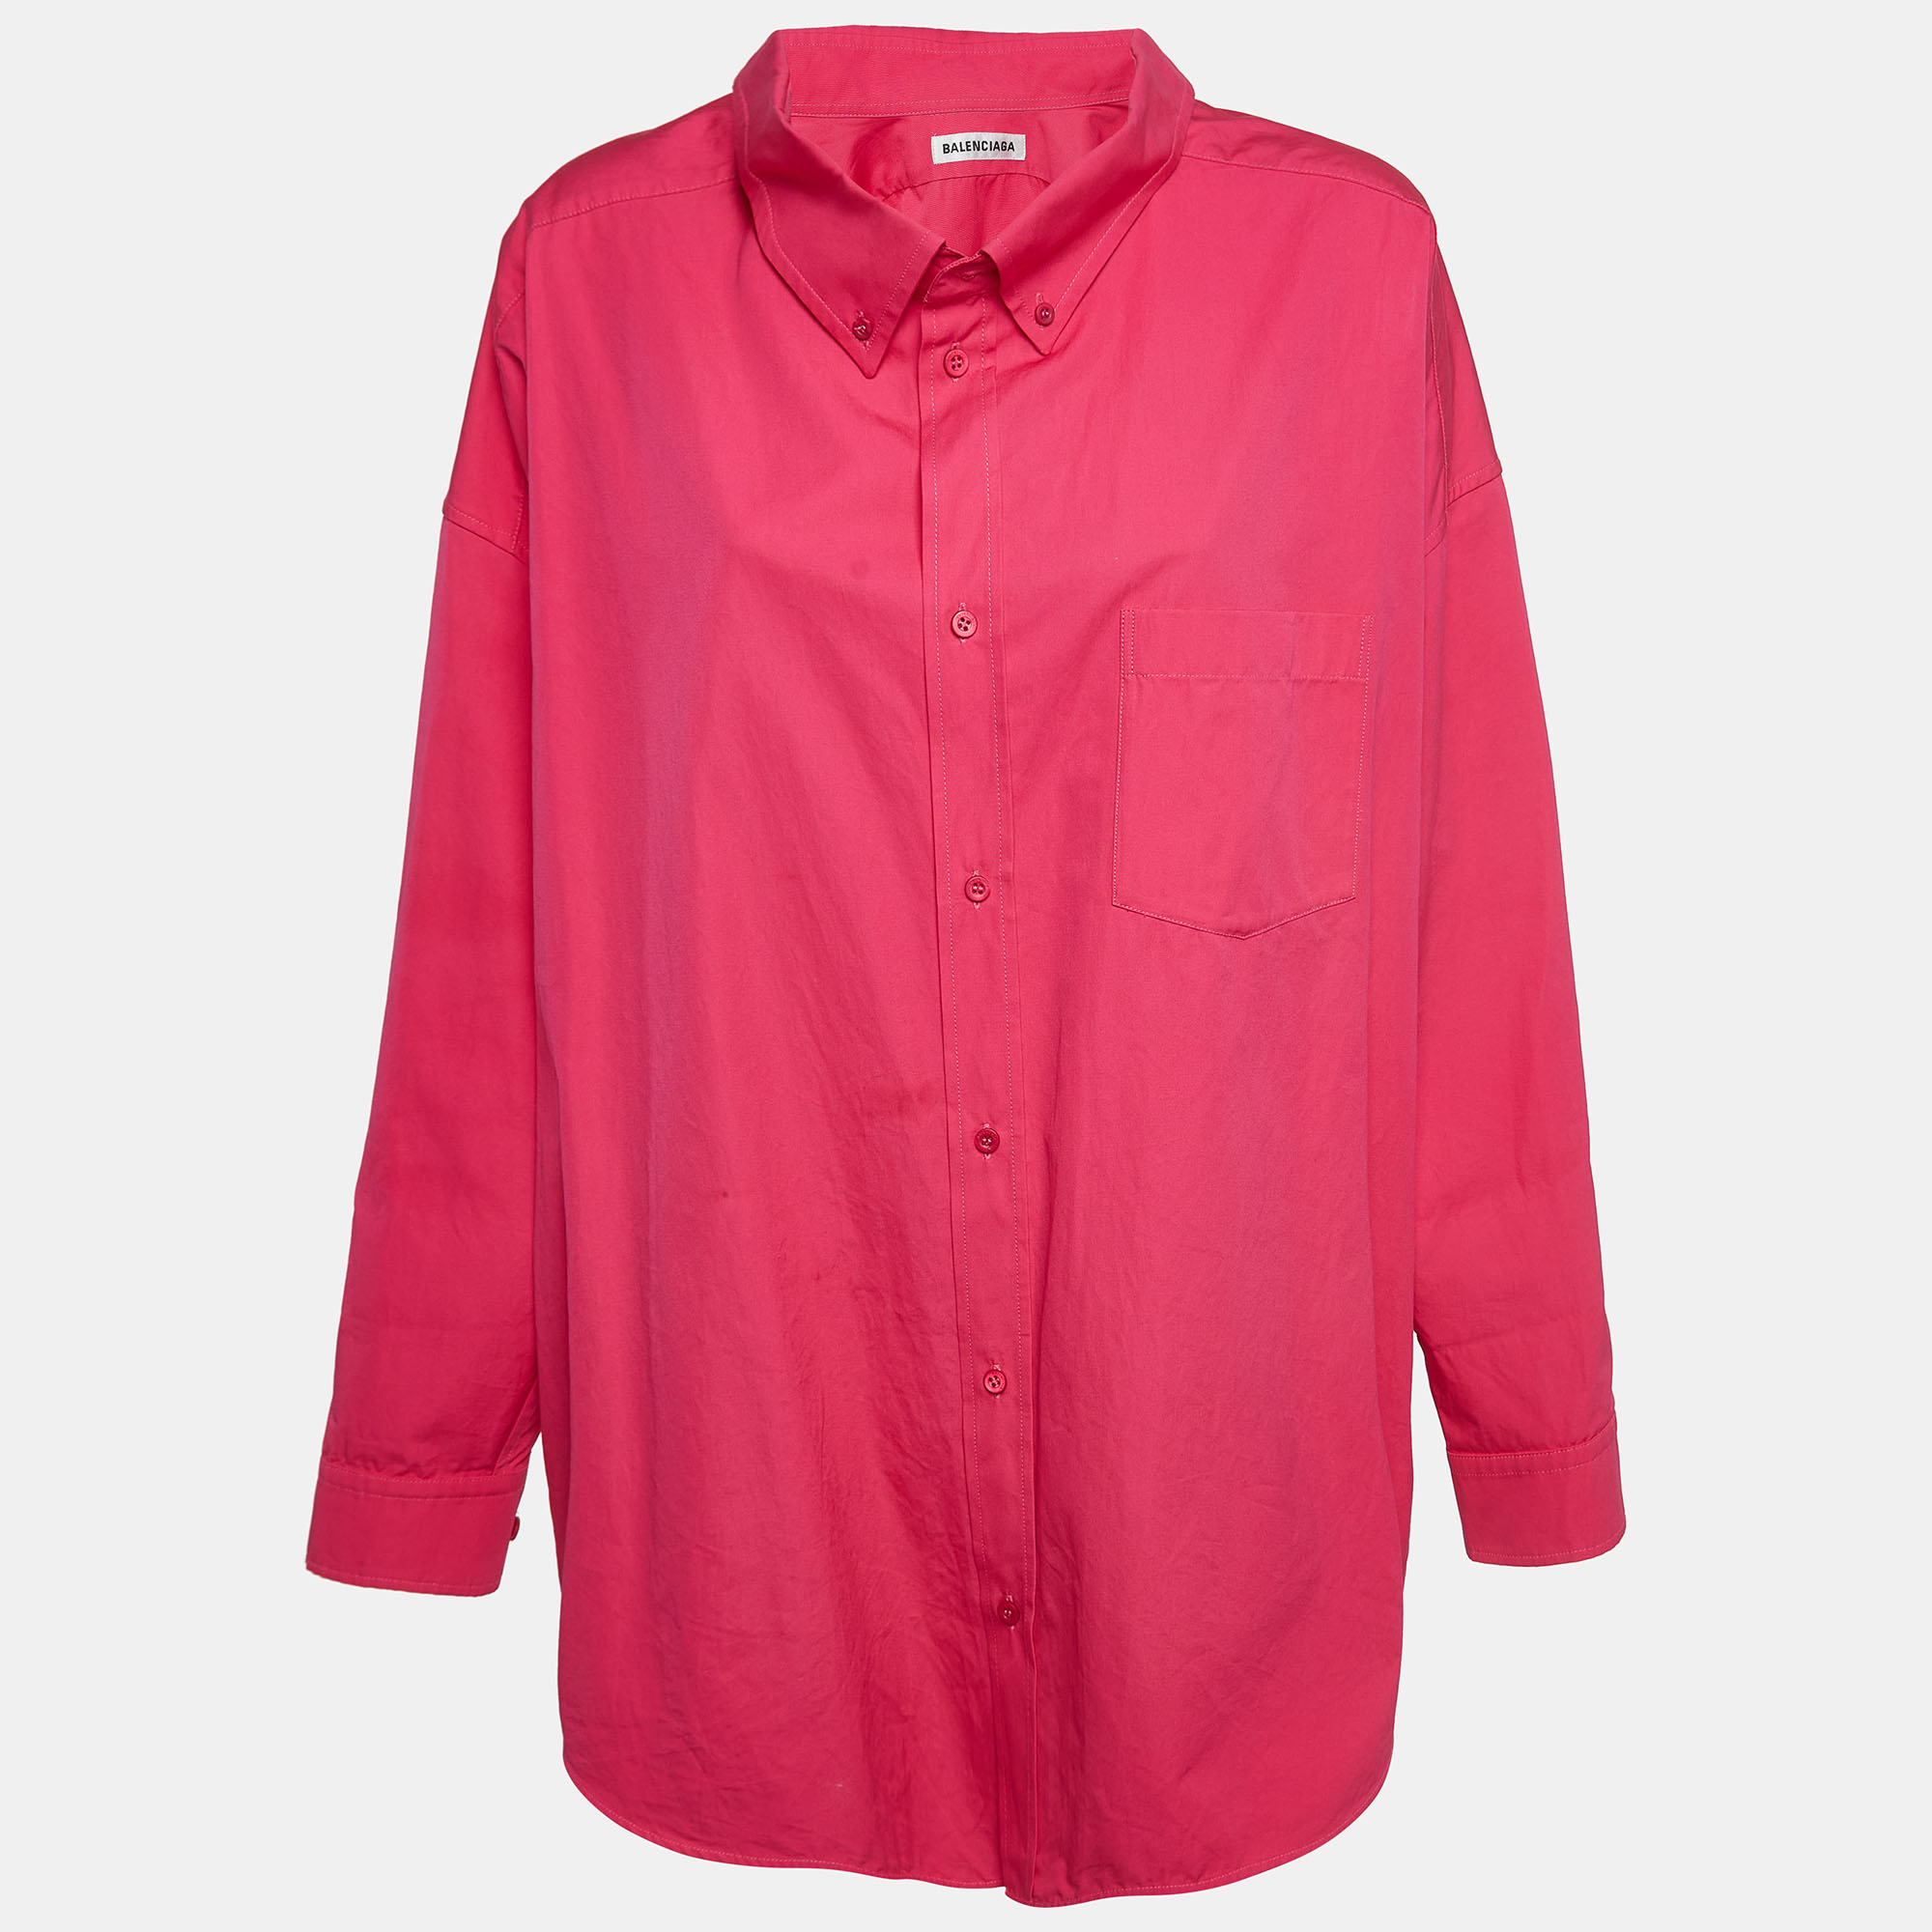 

Balenciaga Pink Logo Print Cotton Oversized Shirt